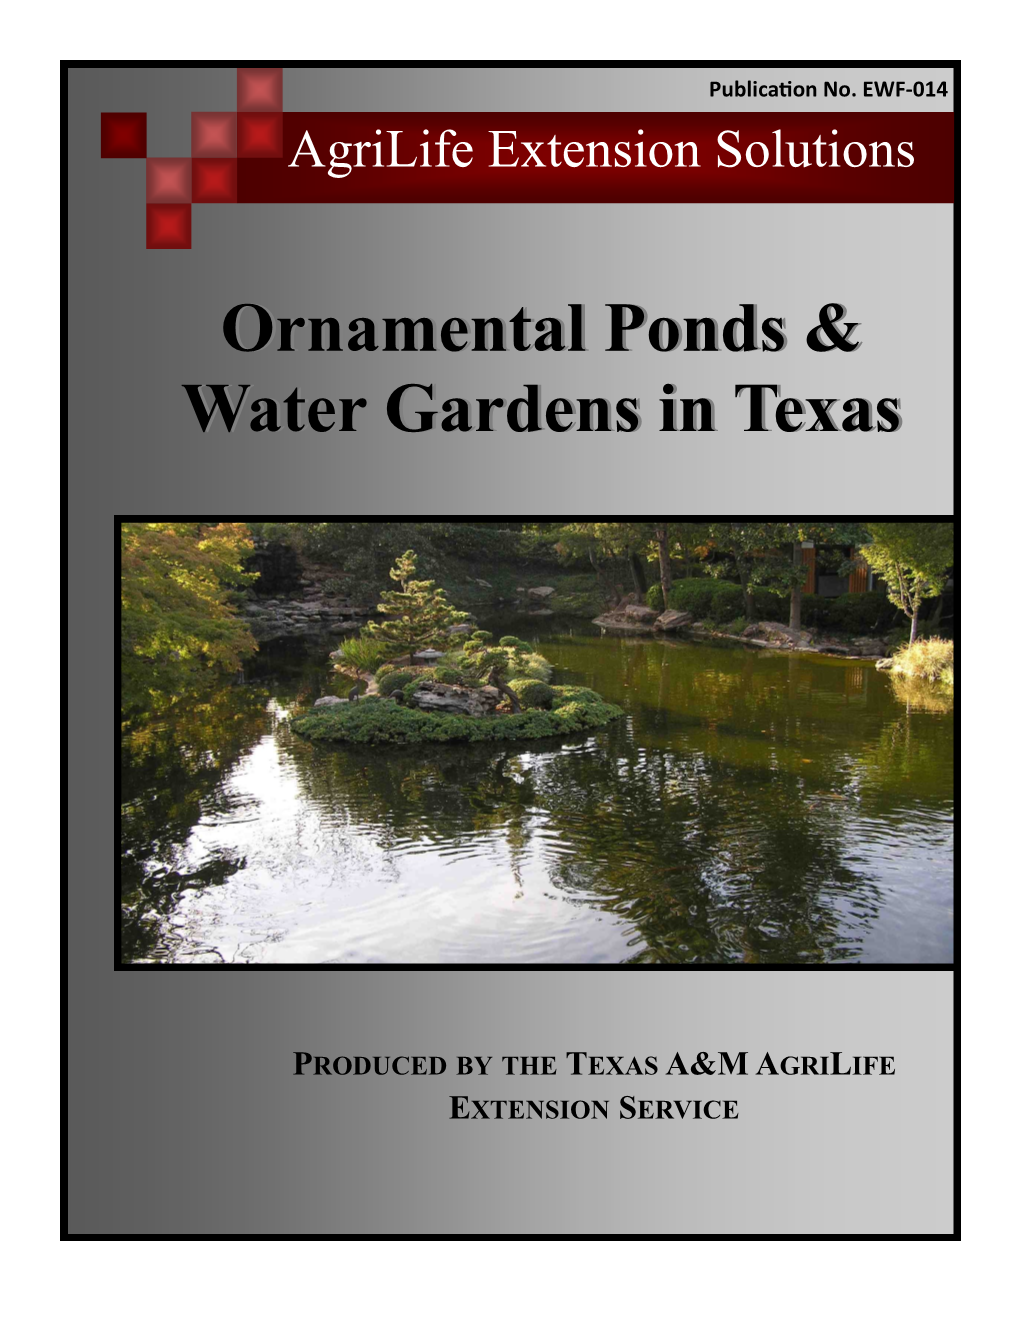 Ornamental Ponds & Water Gardens in Texas